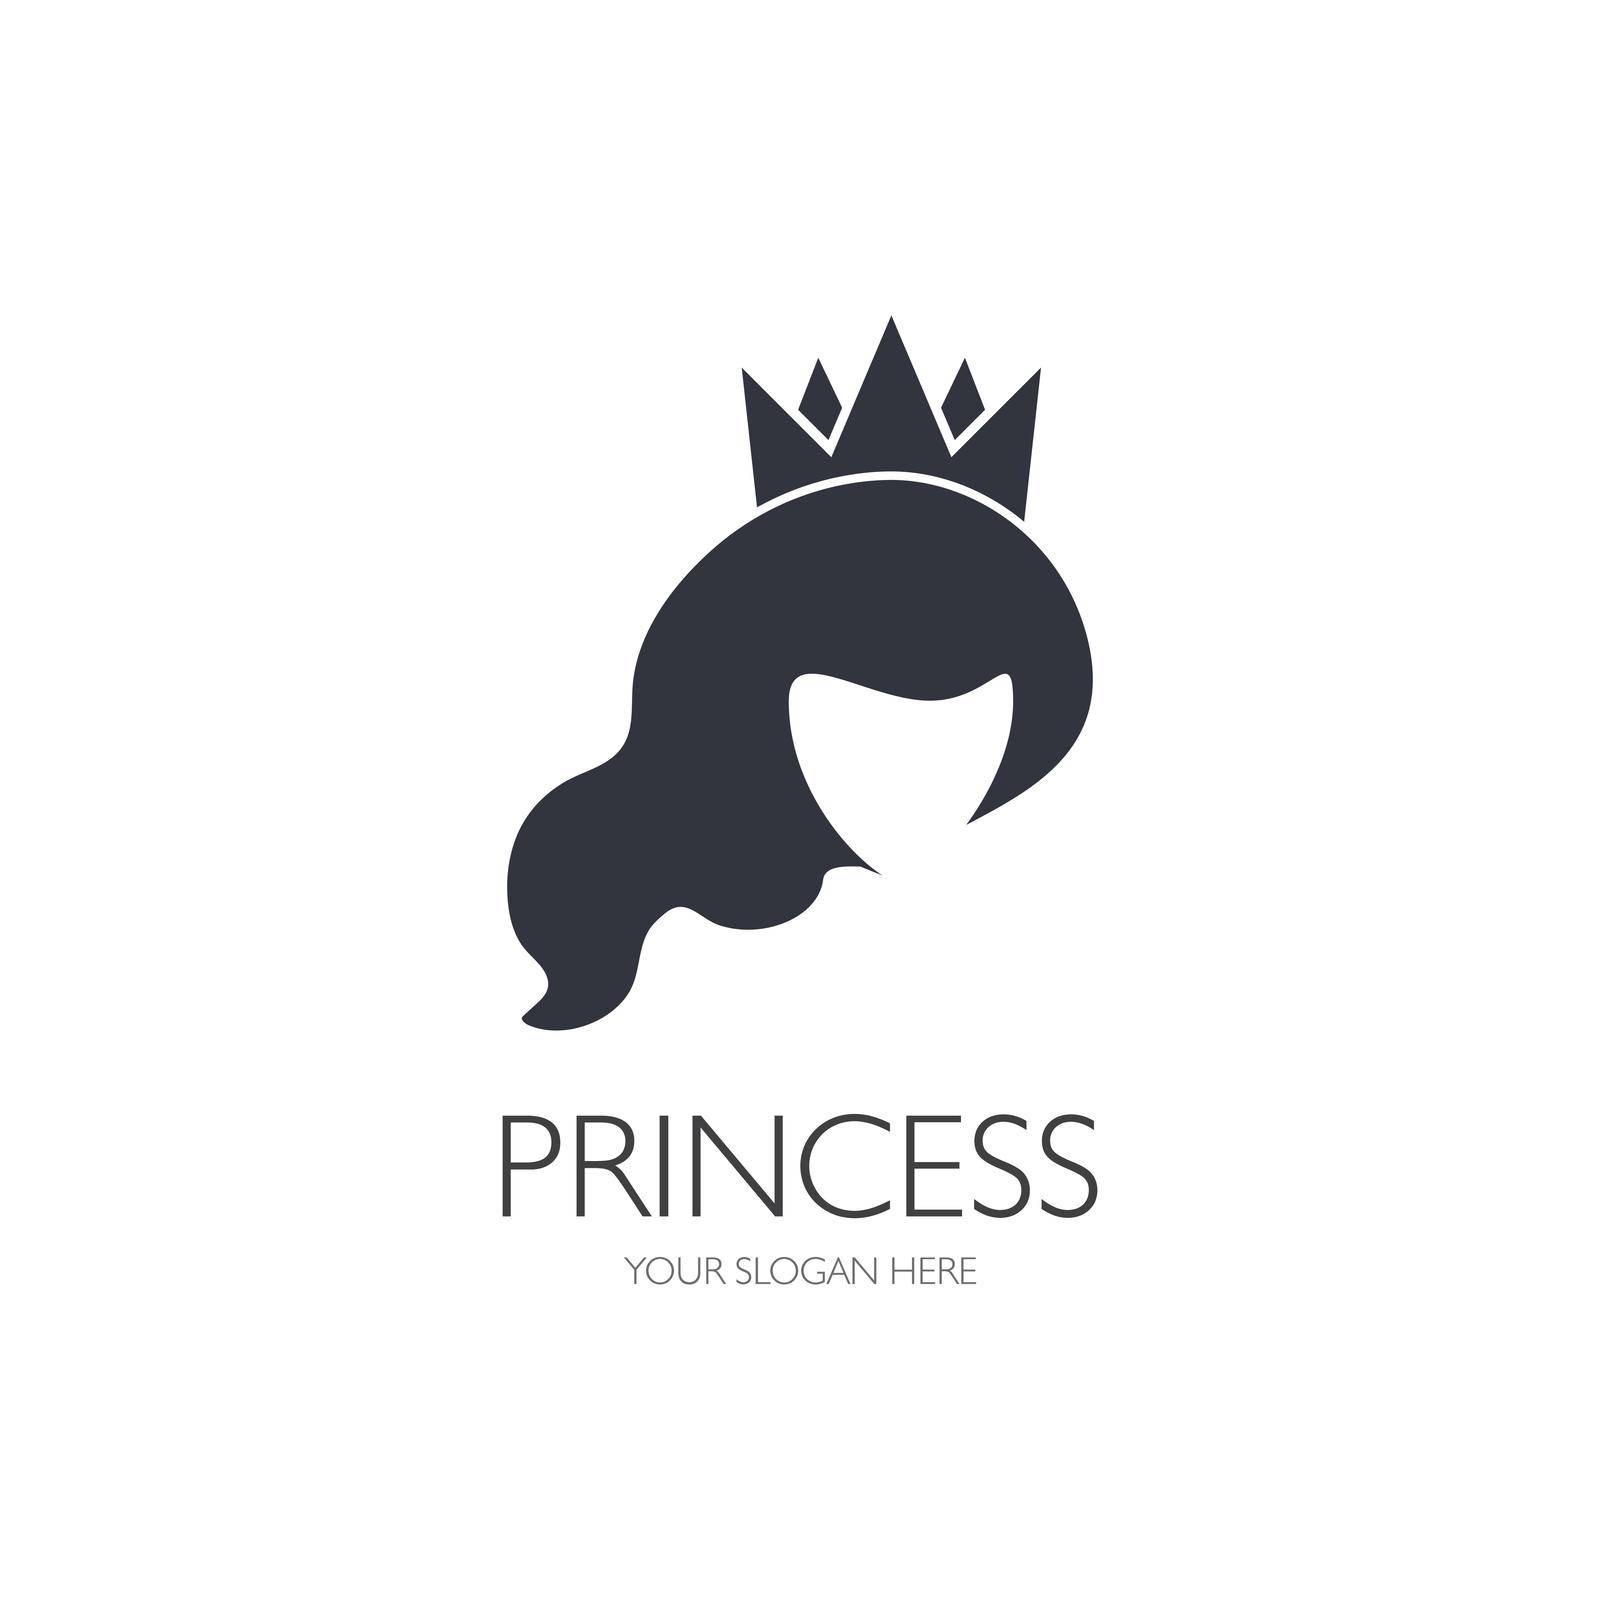 Princess silhouette illustration logo design